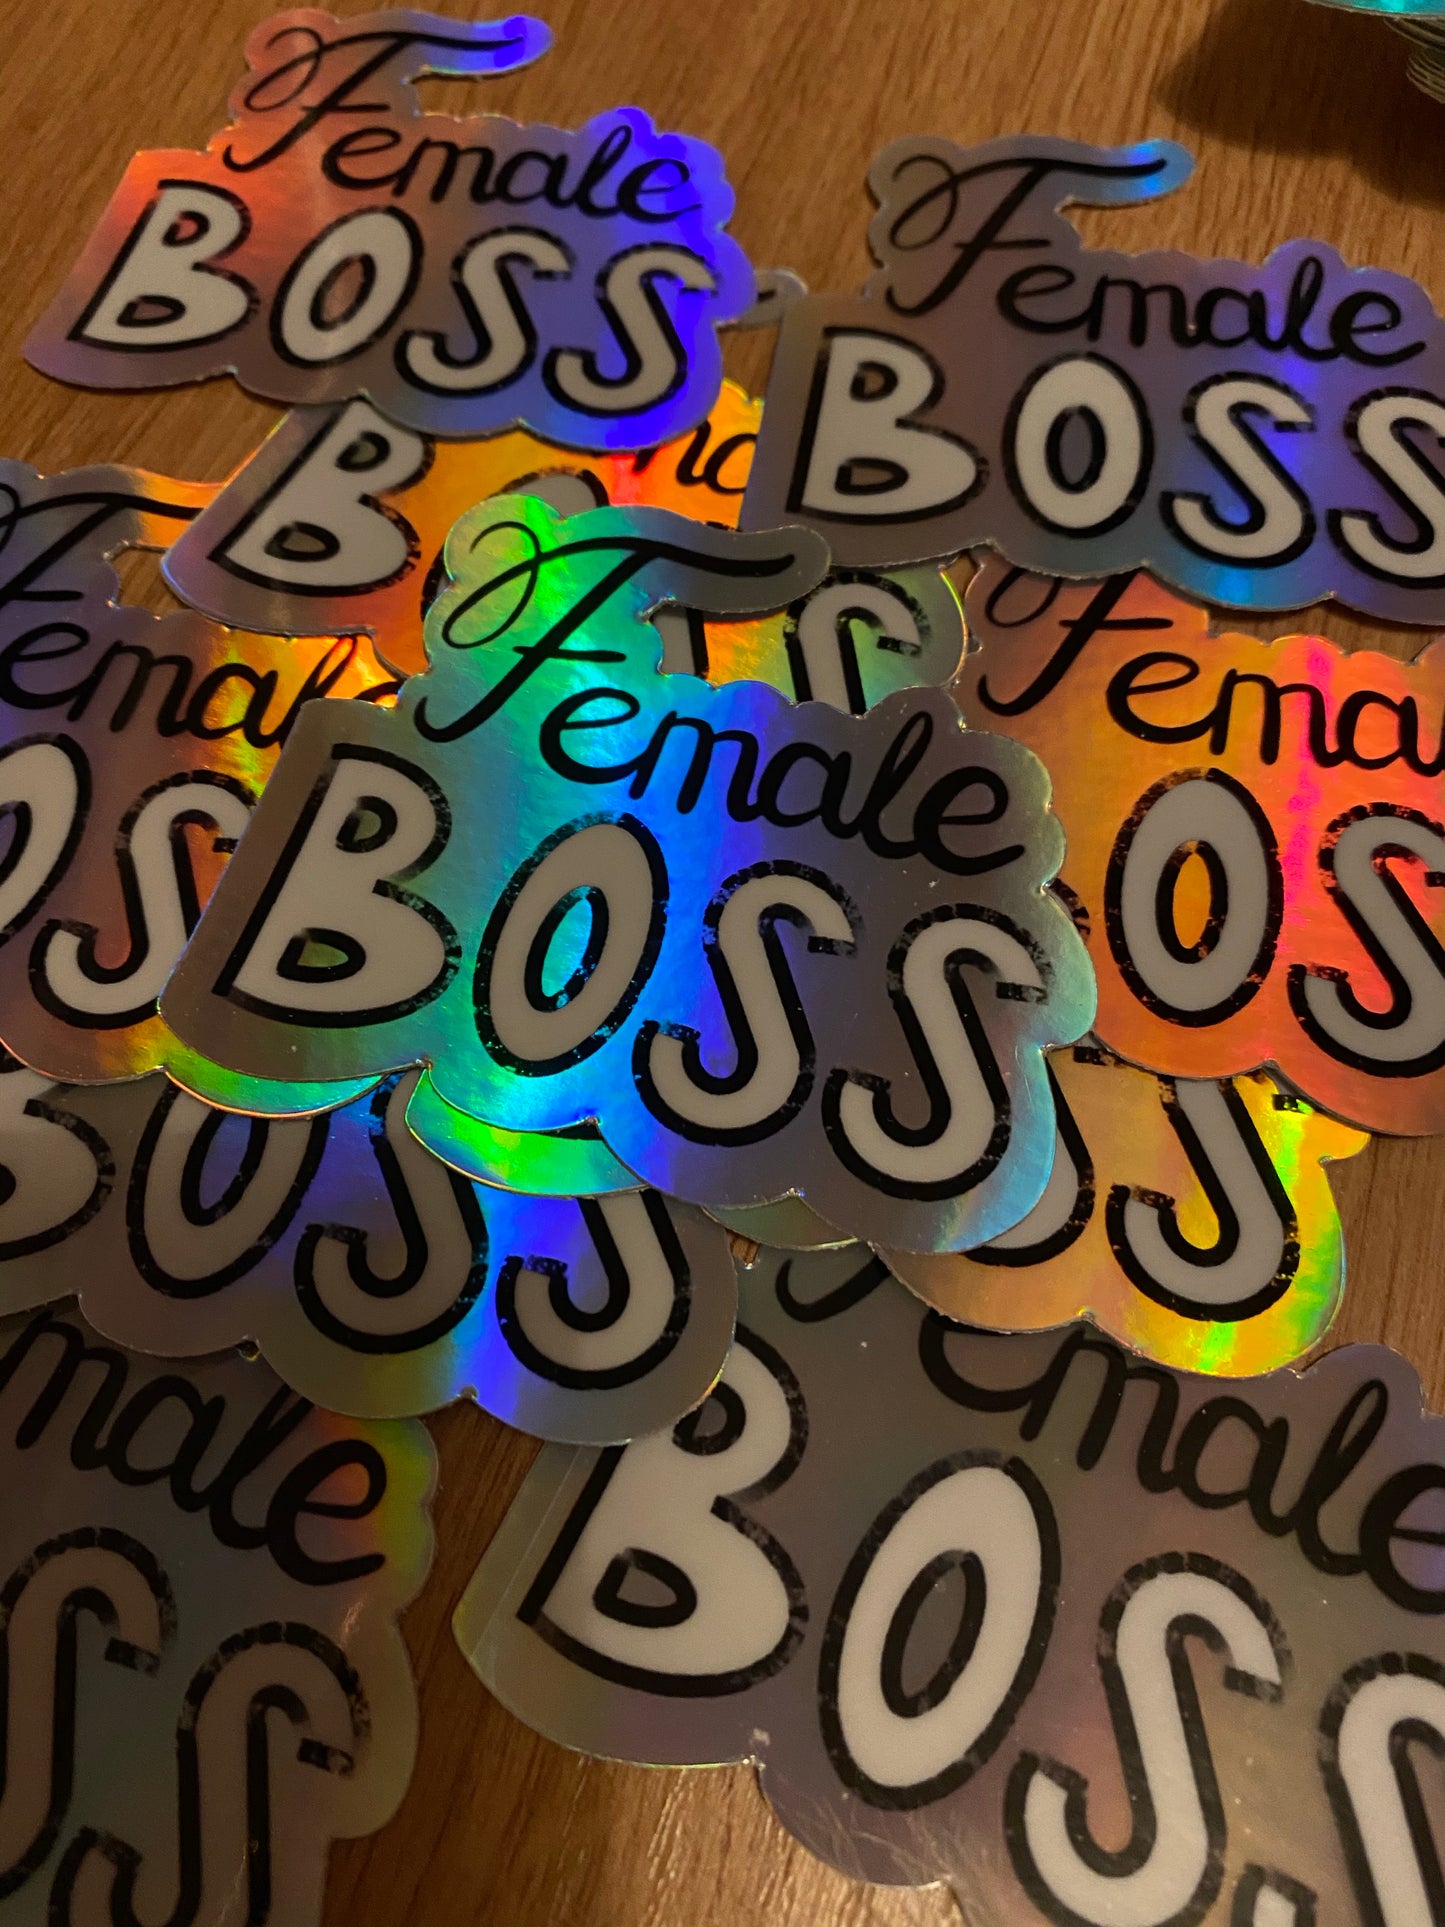 Female Boss holographic sticker